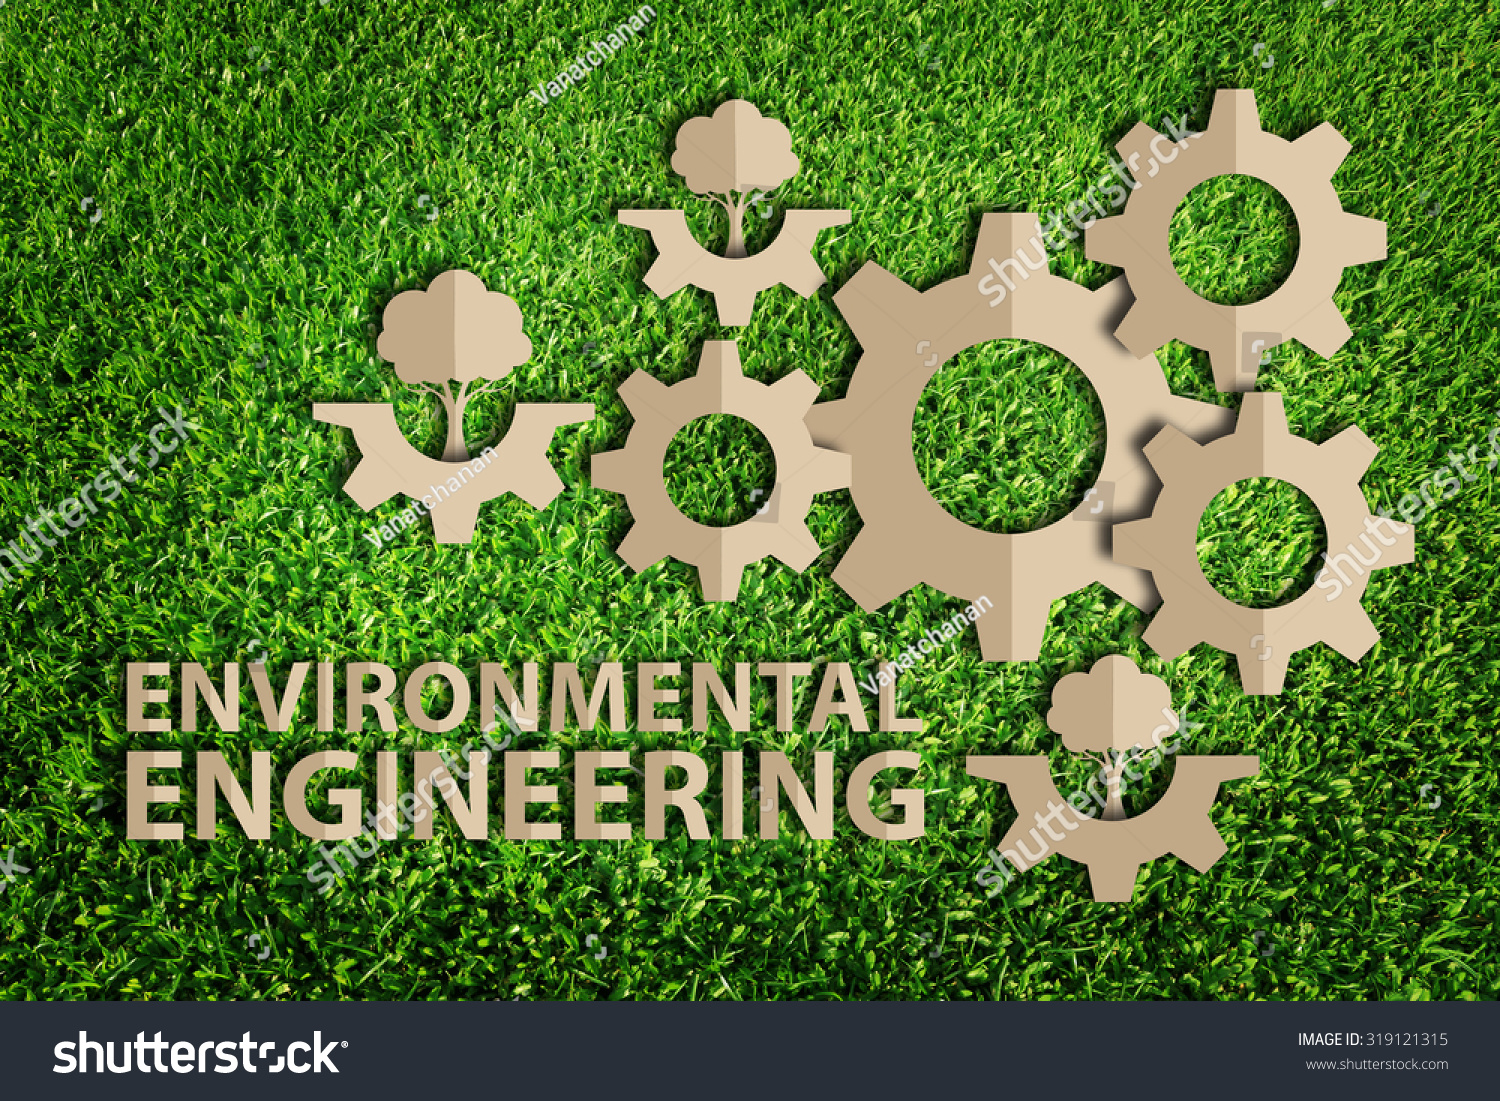 Thesis proposal in environmental engineering